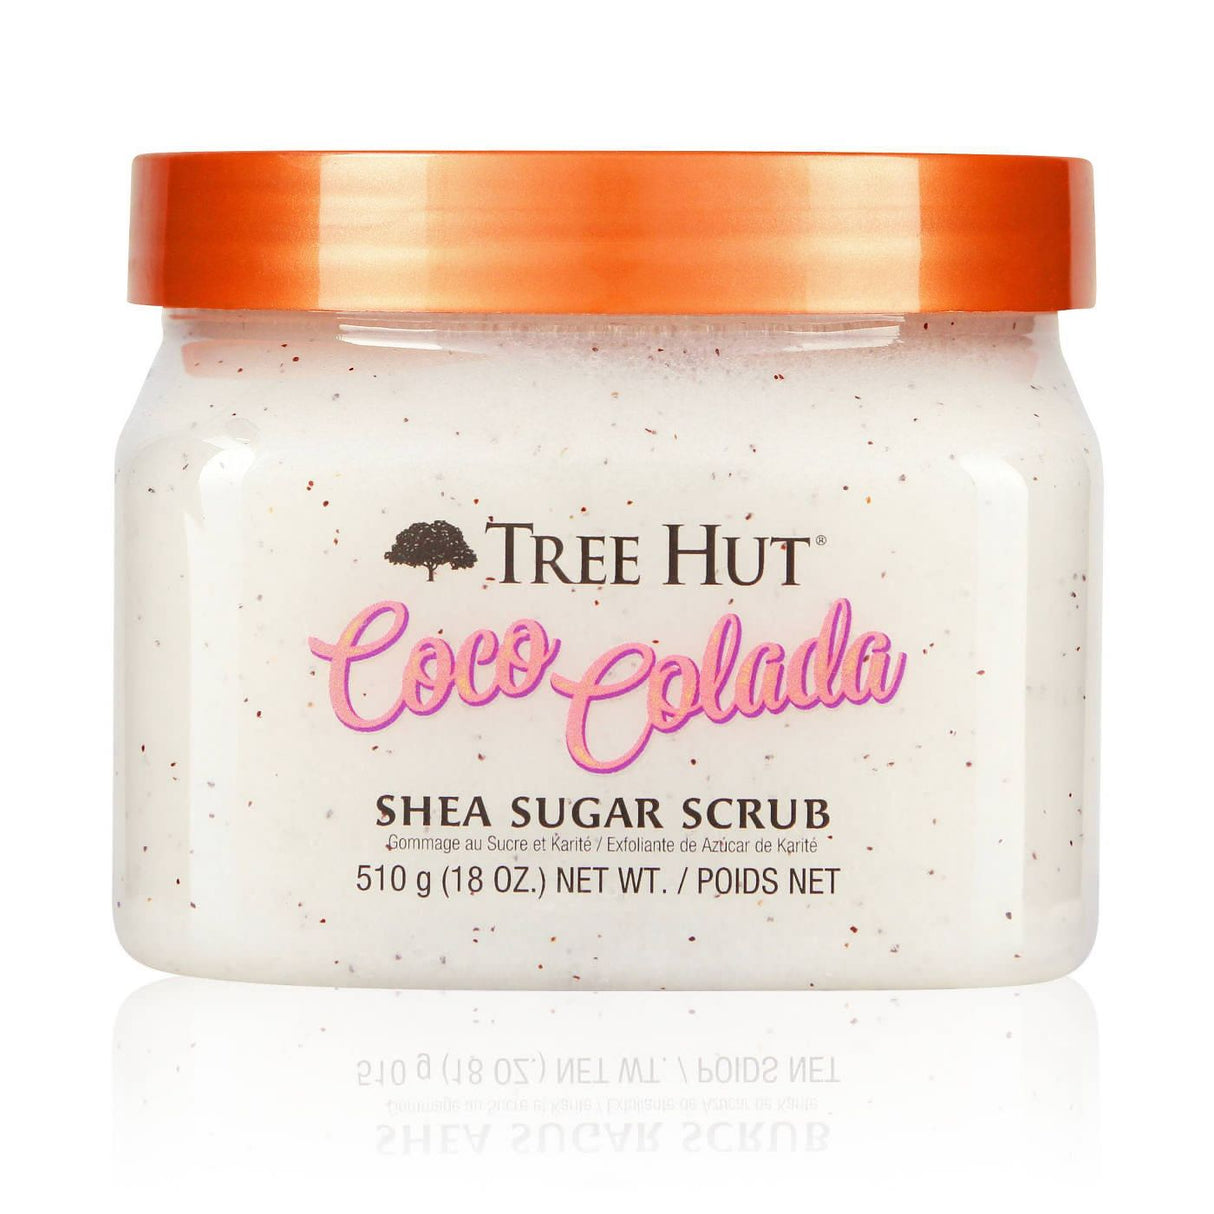 Tree Hut Shea Sugar Scrub (Coco Colada)